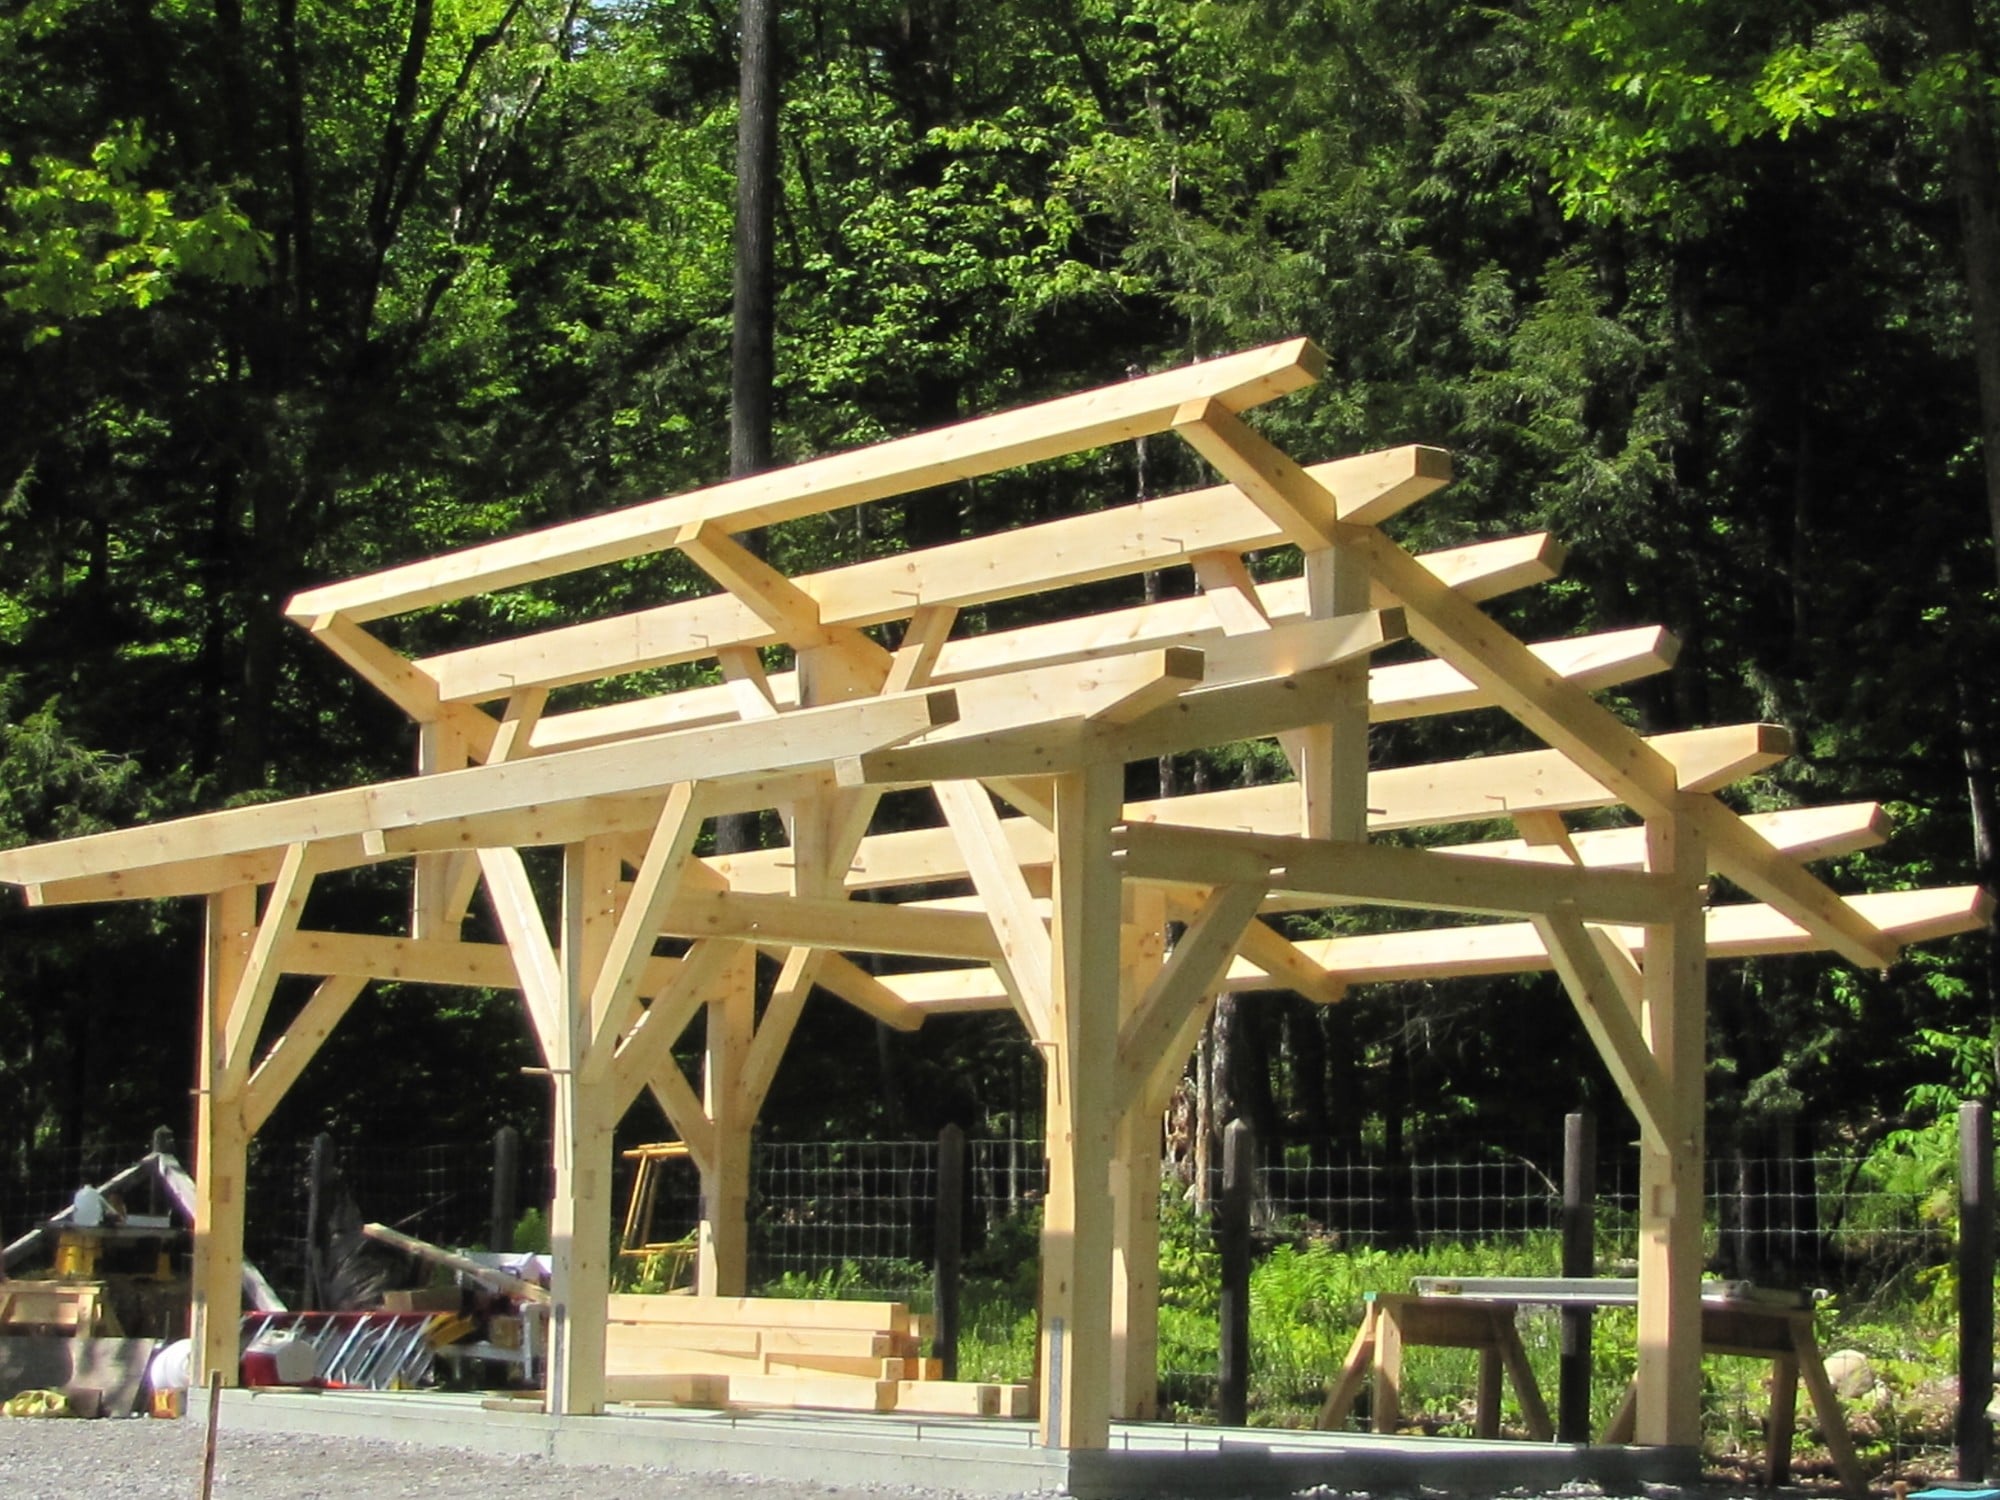 Timber Frame Workshop and Shed